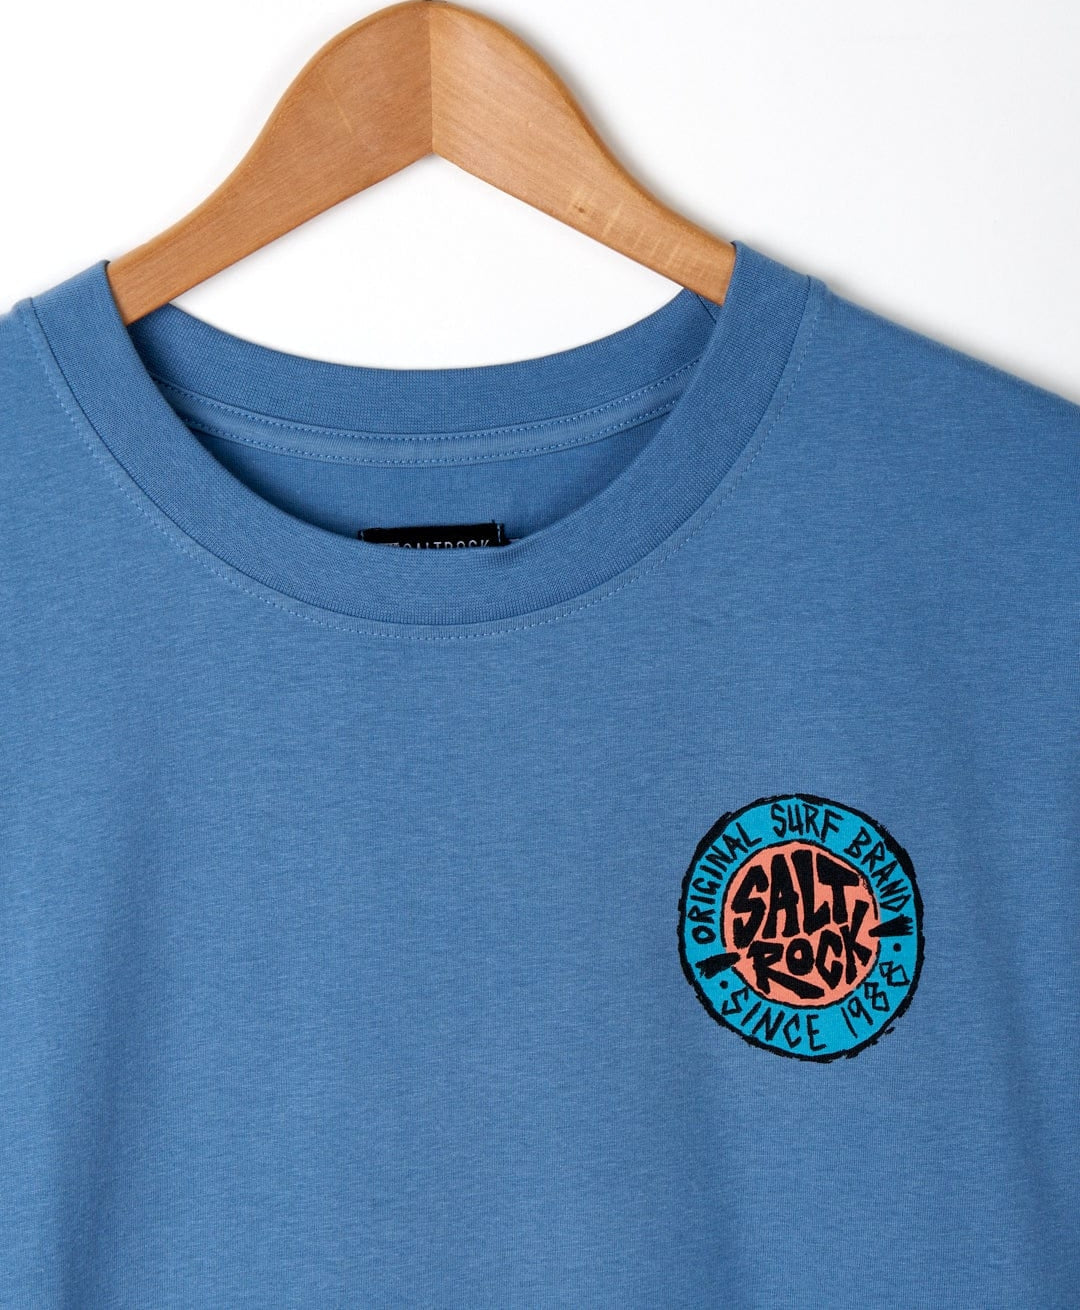 Original SR retro logo print men's t-shirt from Saltrock in Blue.